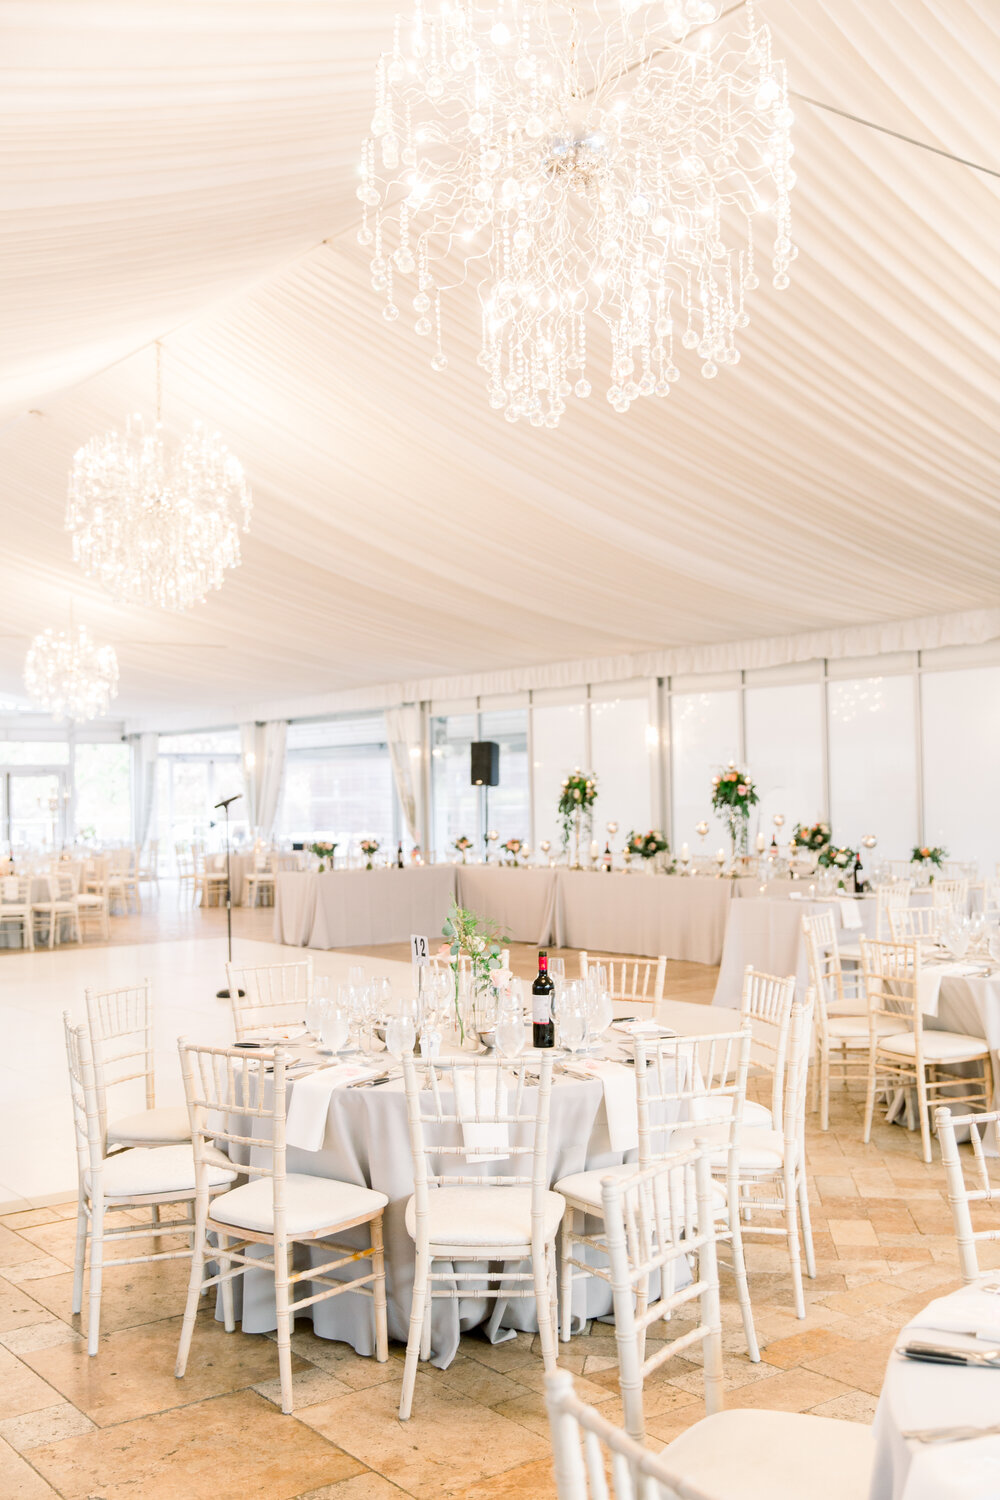 Galleria Marchetti wedding reception tables and dance floor